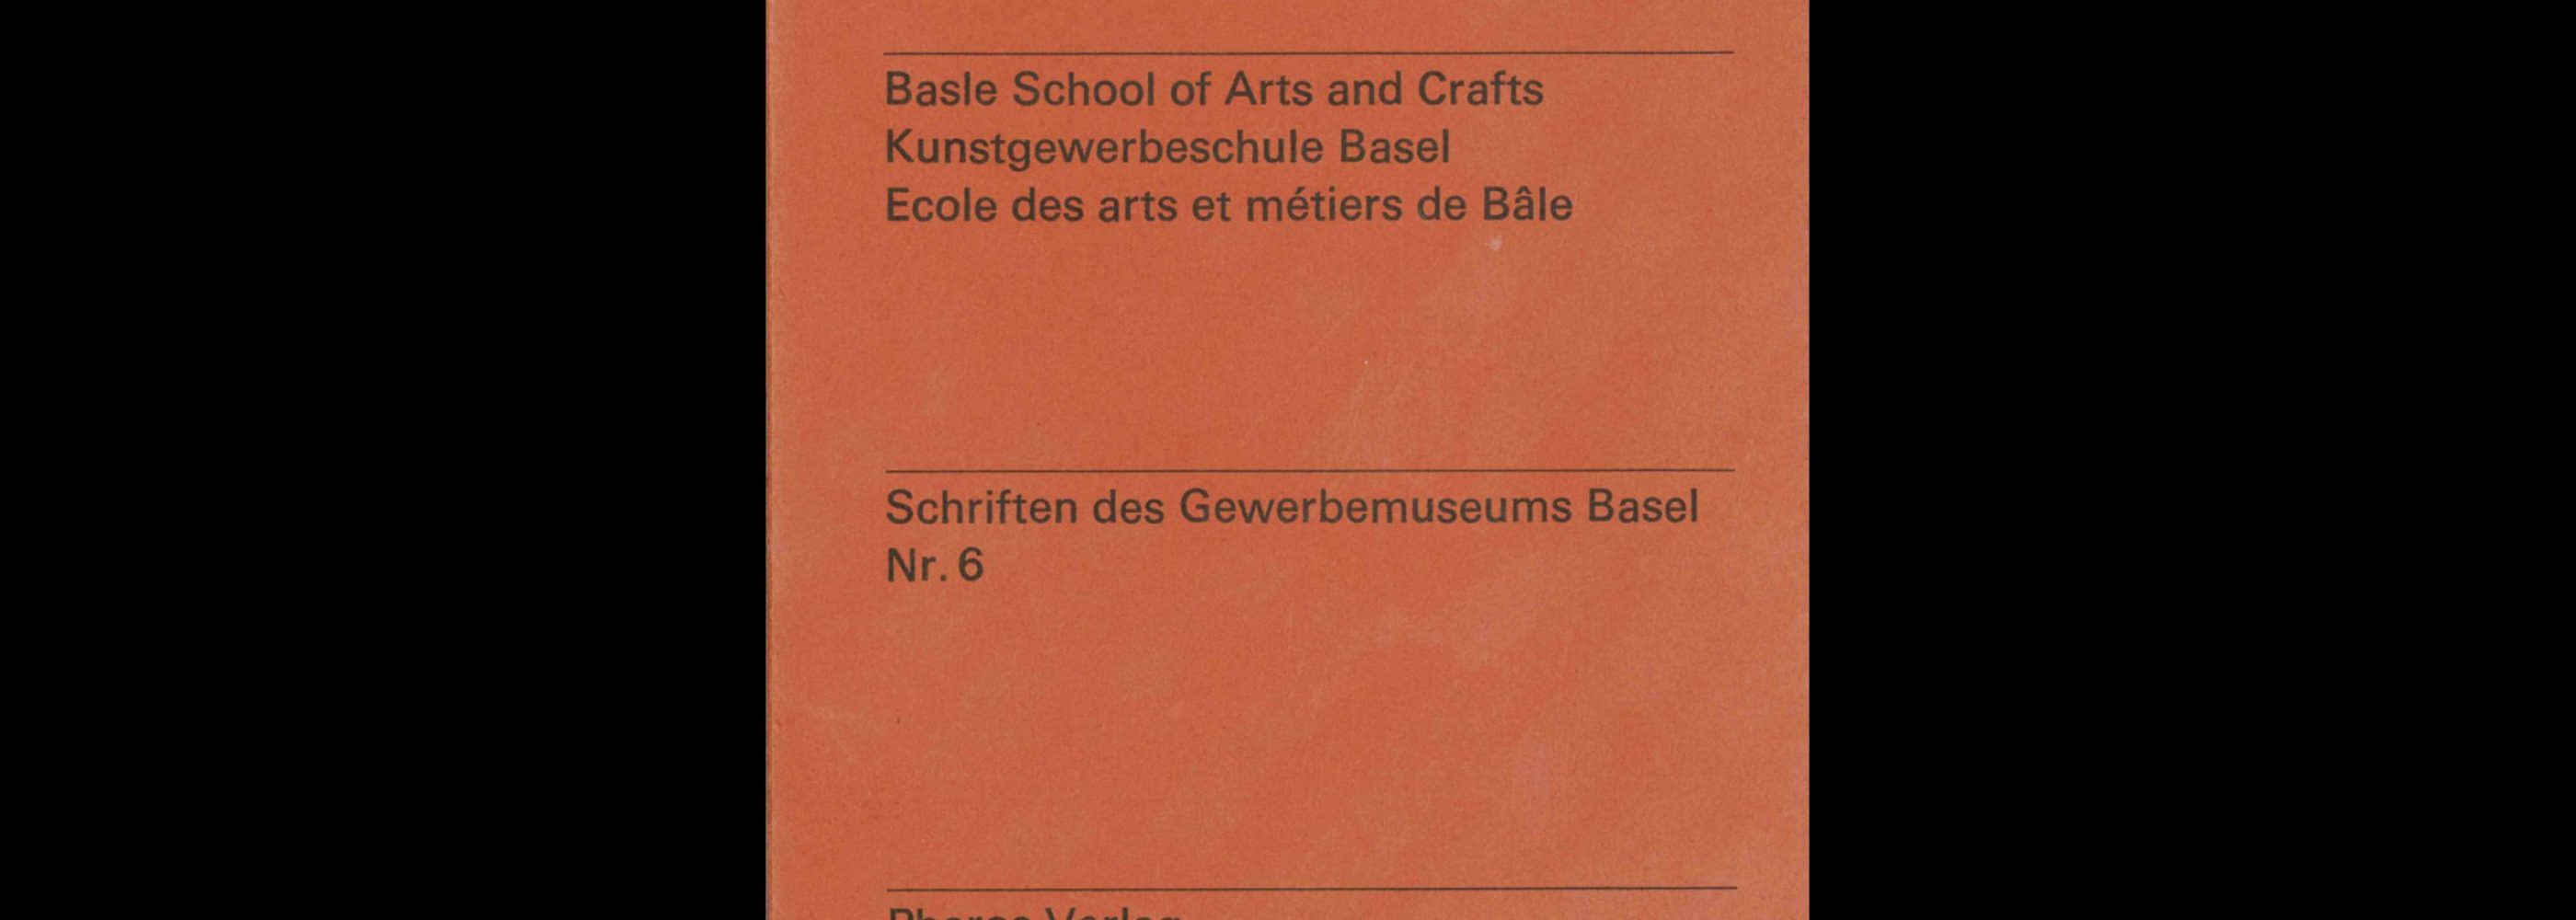 Graphic Design, Basel School of Arts and Crafts, Nr.6, 1967. Design by Kurt Hauert